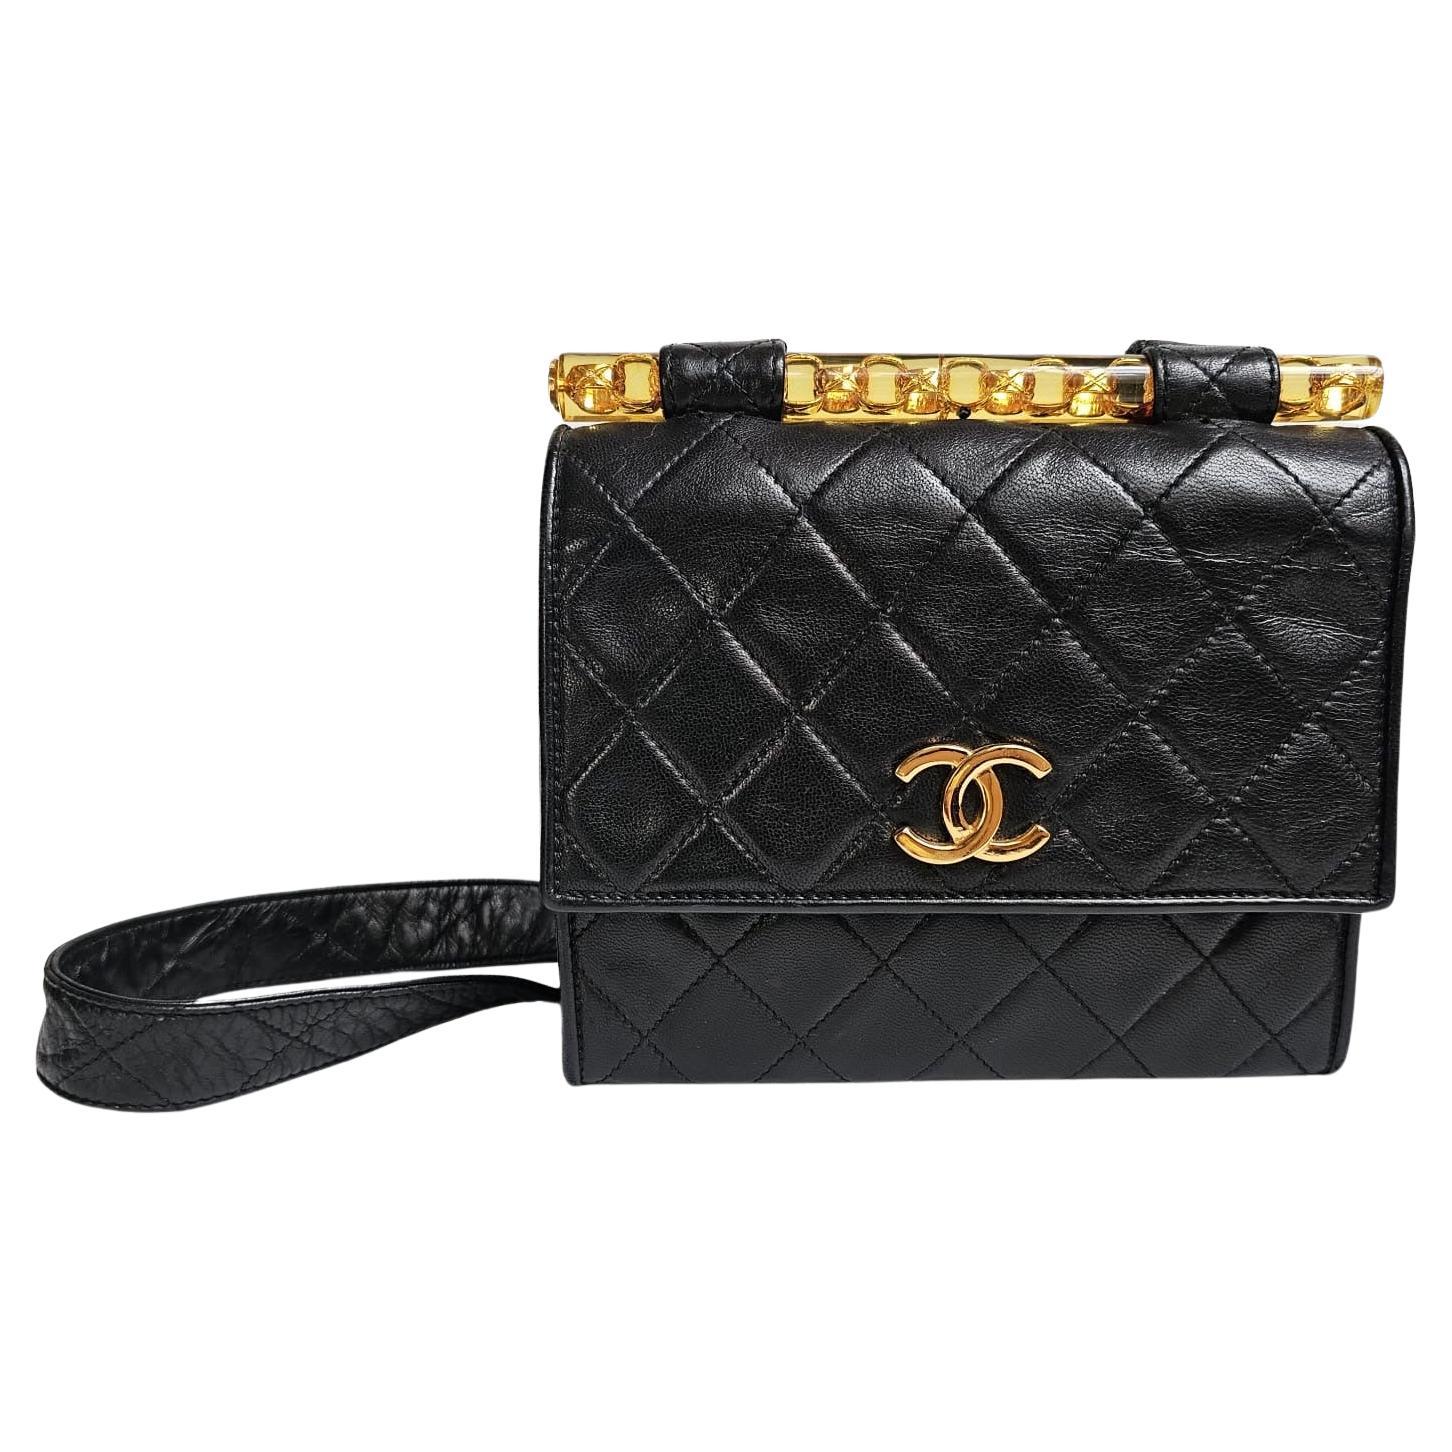 Where can I buy a Chanel Mini Flap bag?